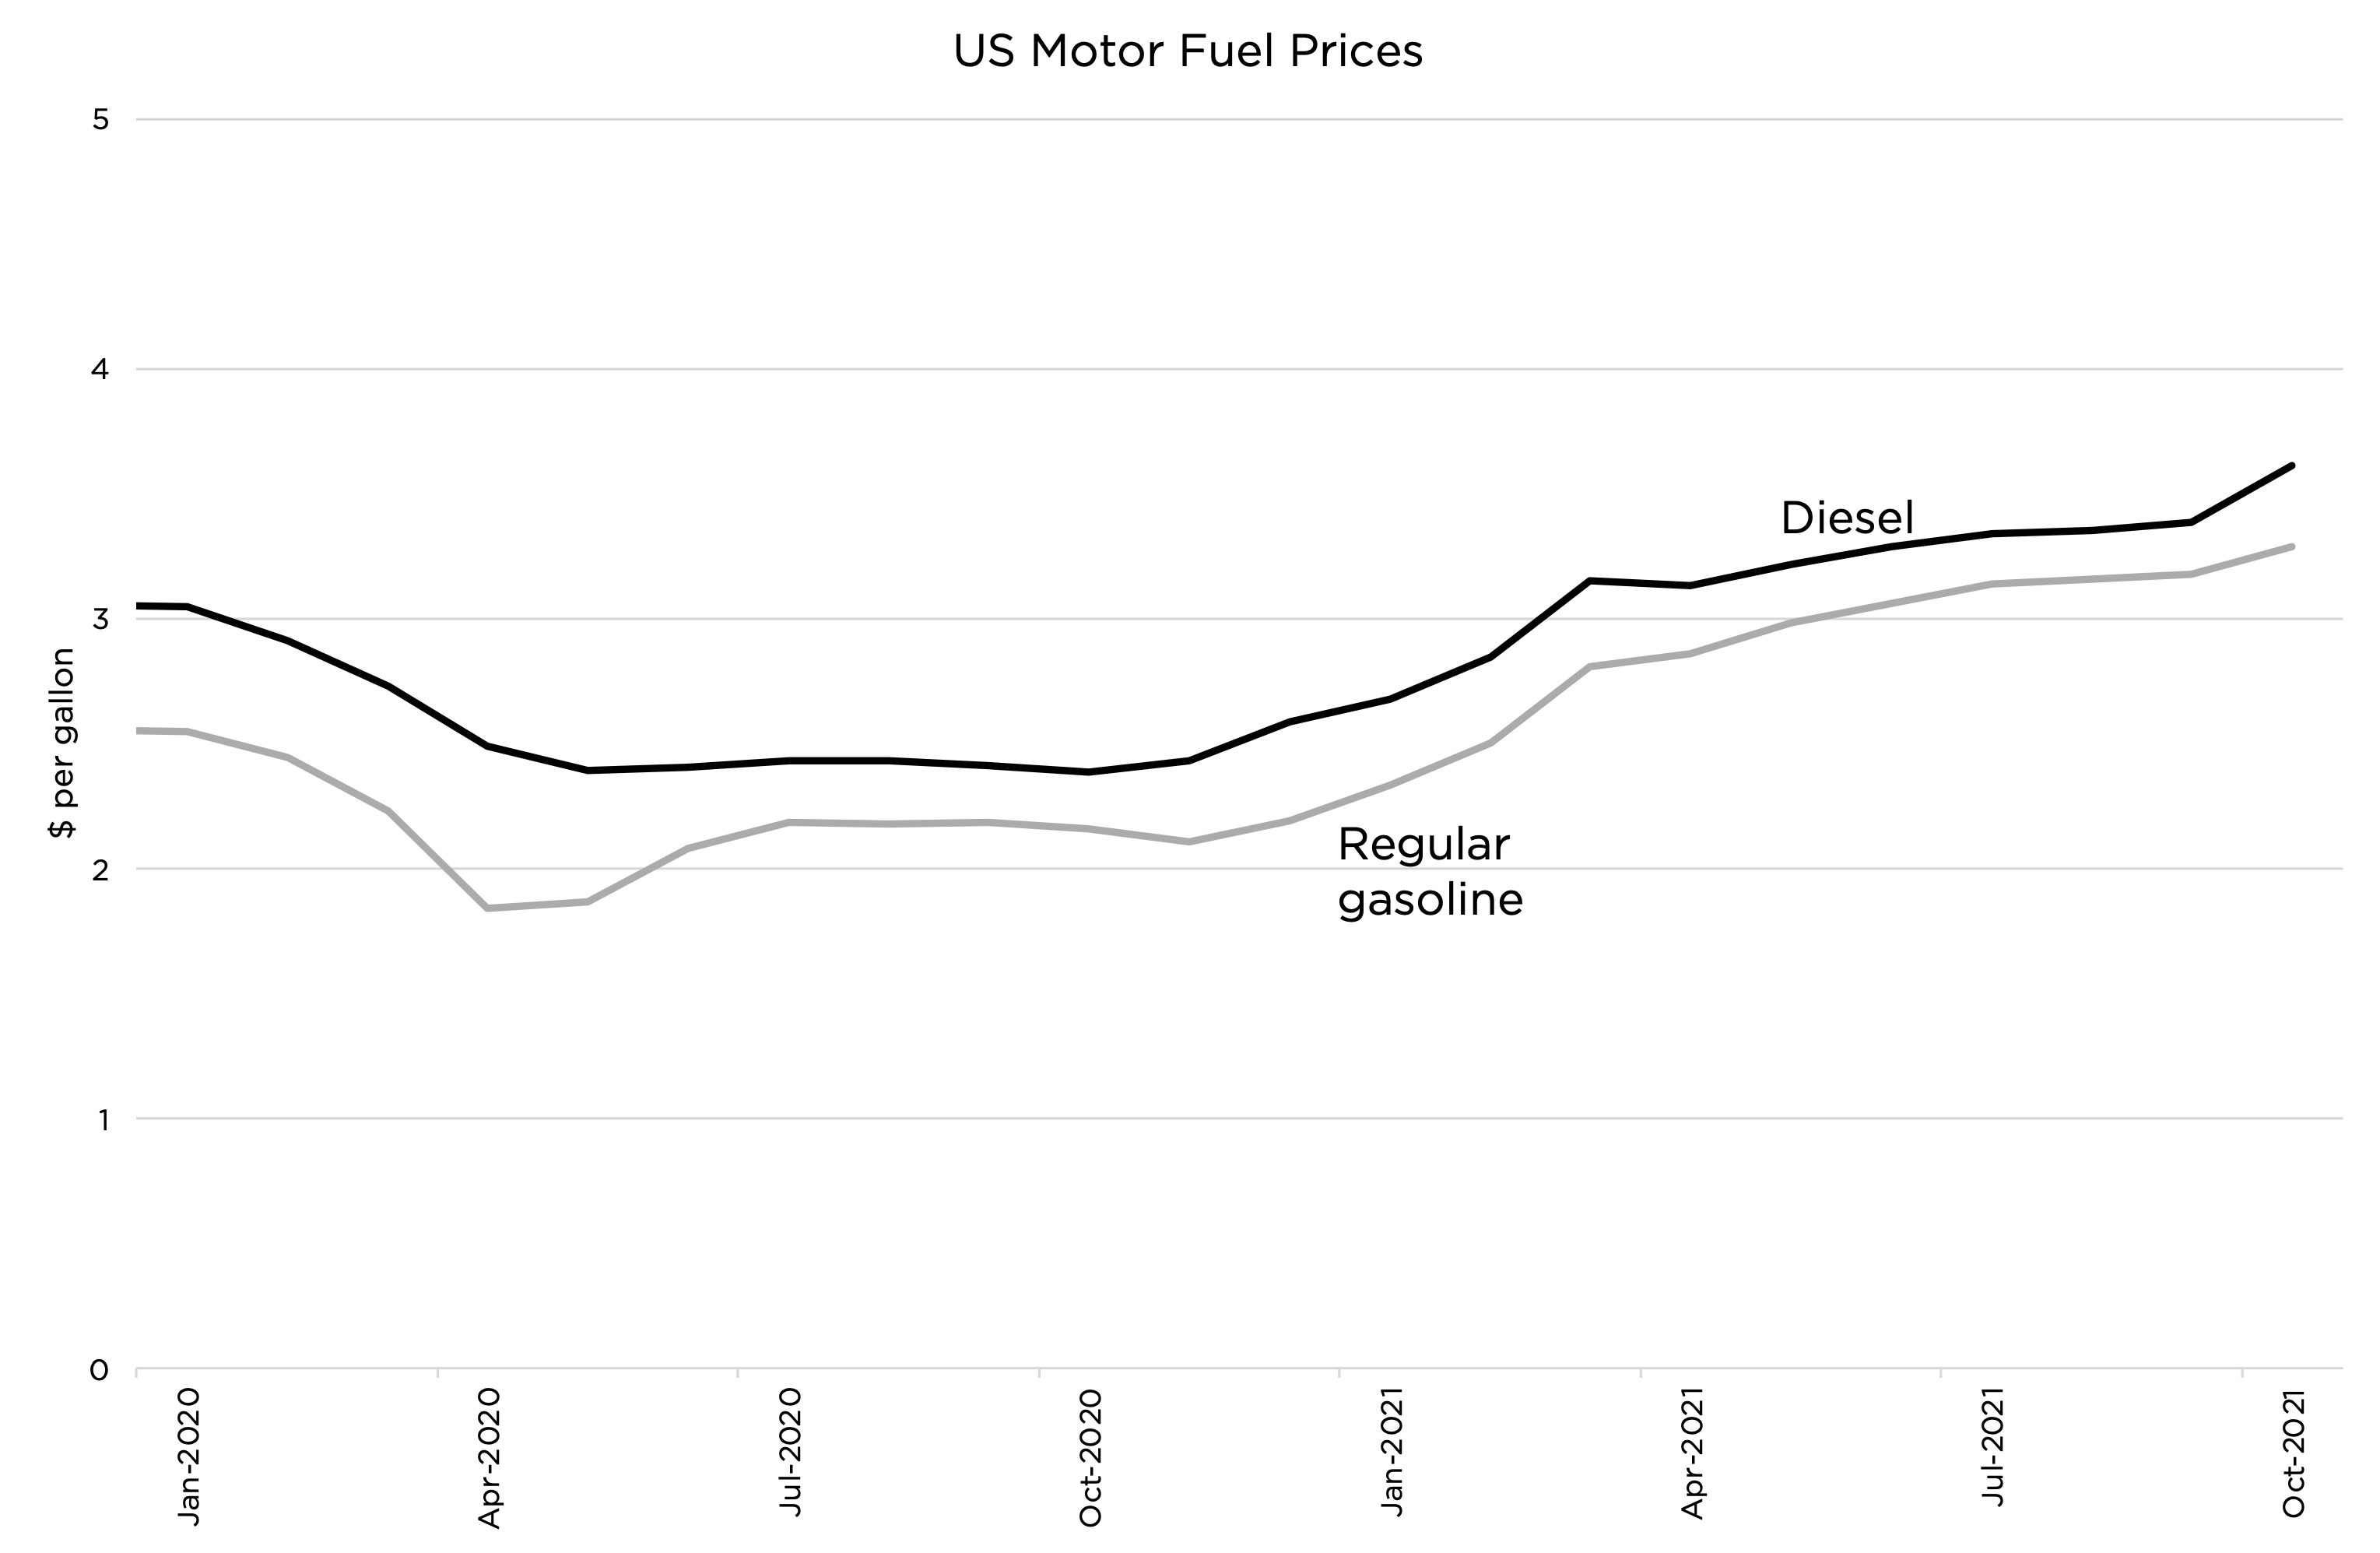 US motor fuel prices